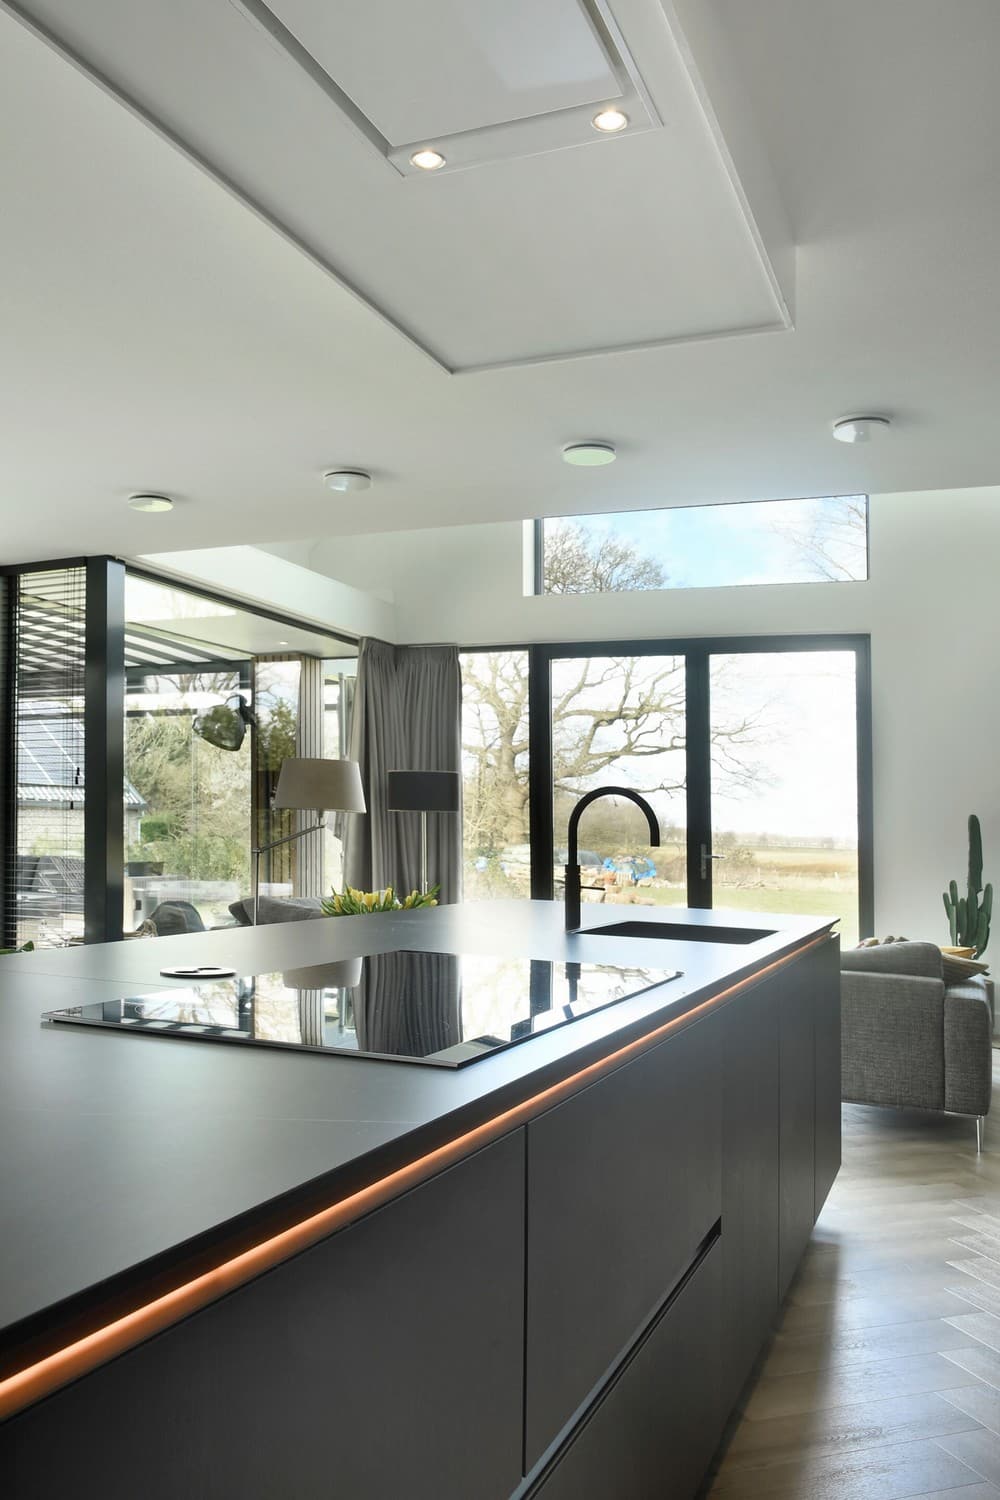 kitchen, The Netherlands / Lautenbag Architectuur